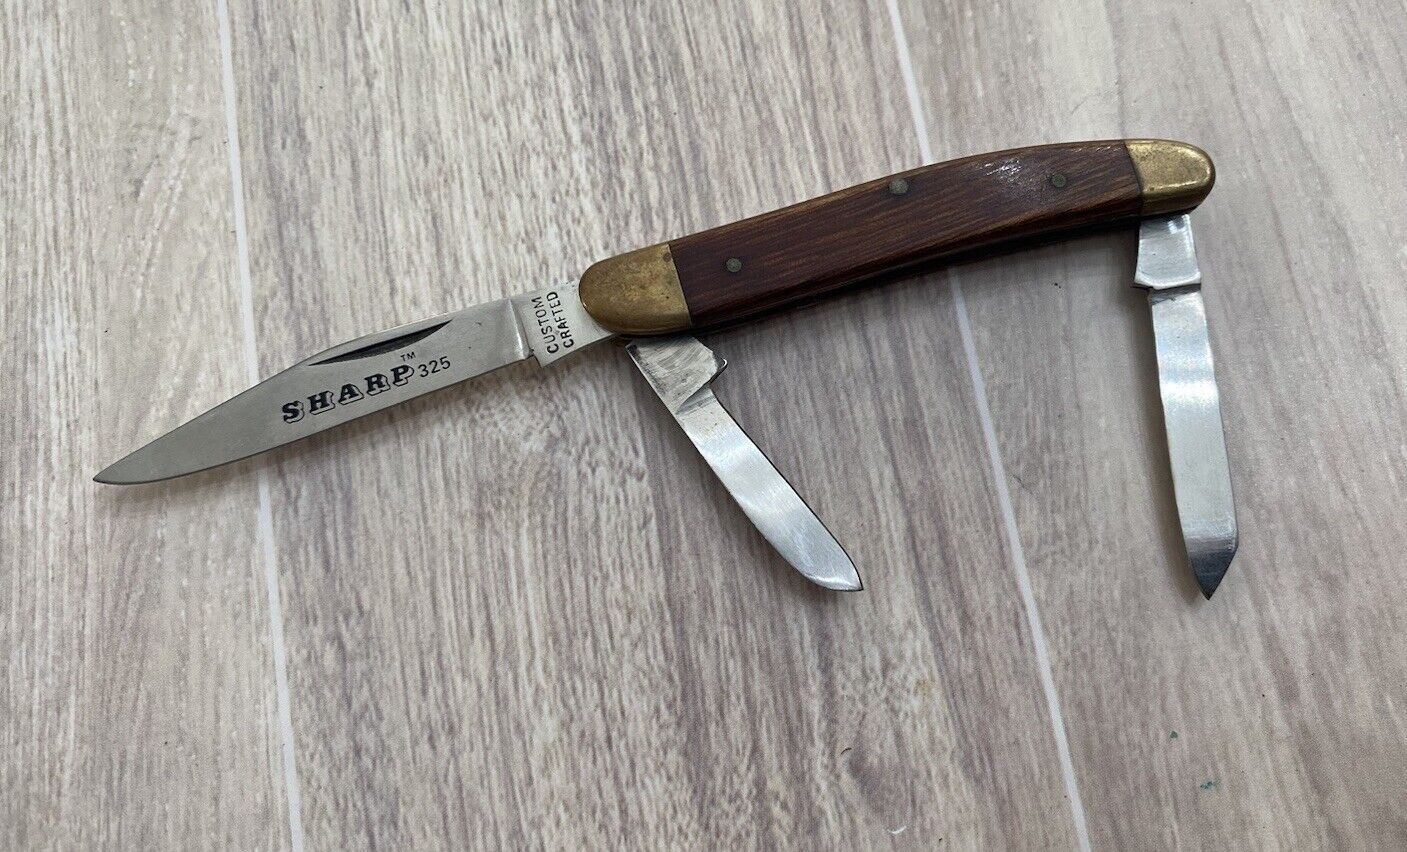 SHARP Brand 325 Custom Crafted 3 Blade Folding Pocket Knife Made in Japan